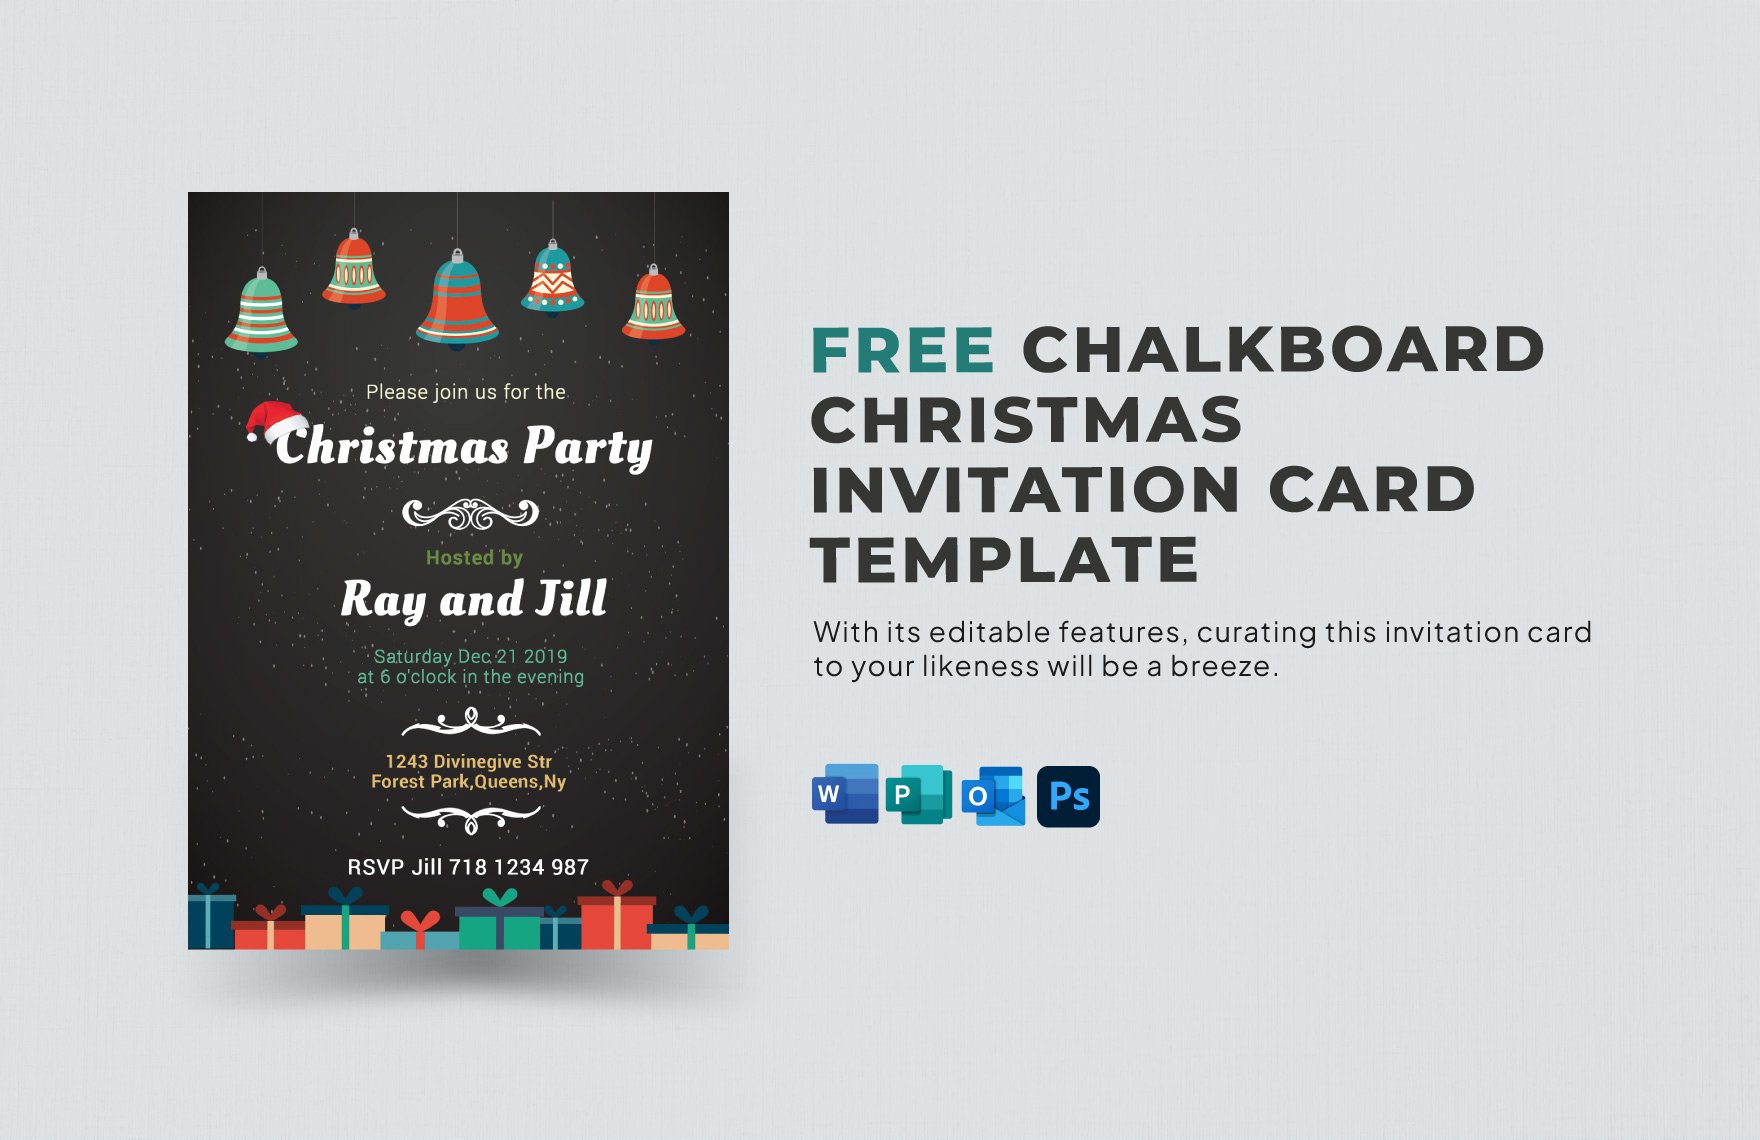 Chalkboard Christmas Invitation Card Template